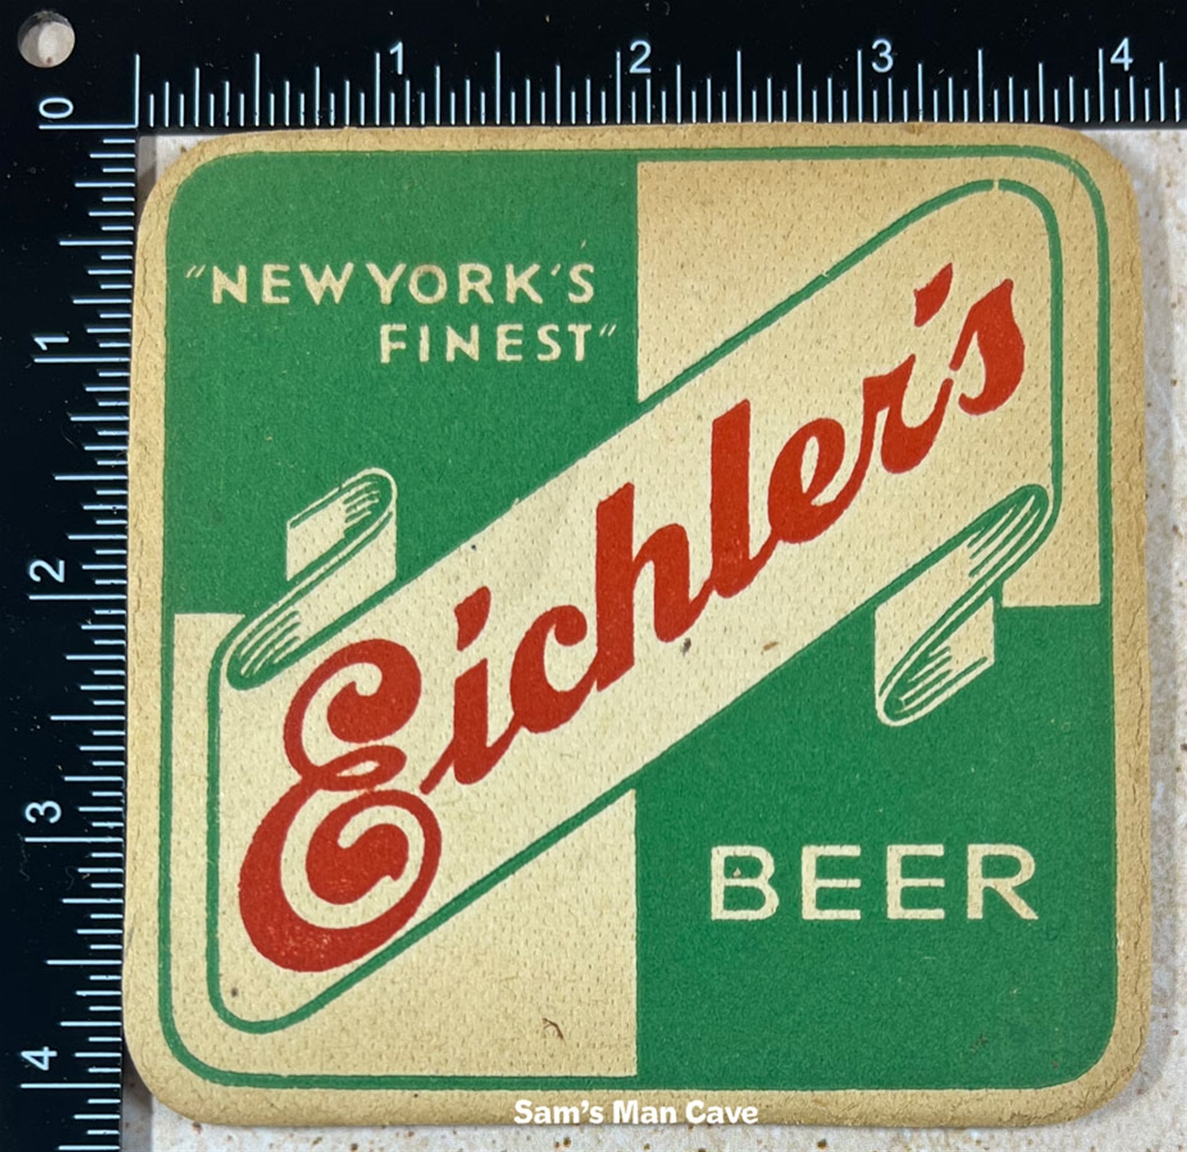 Eichler's Beer Coaster